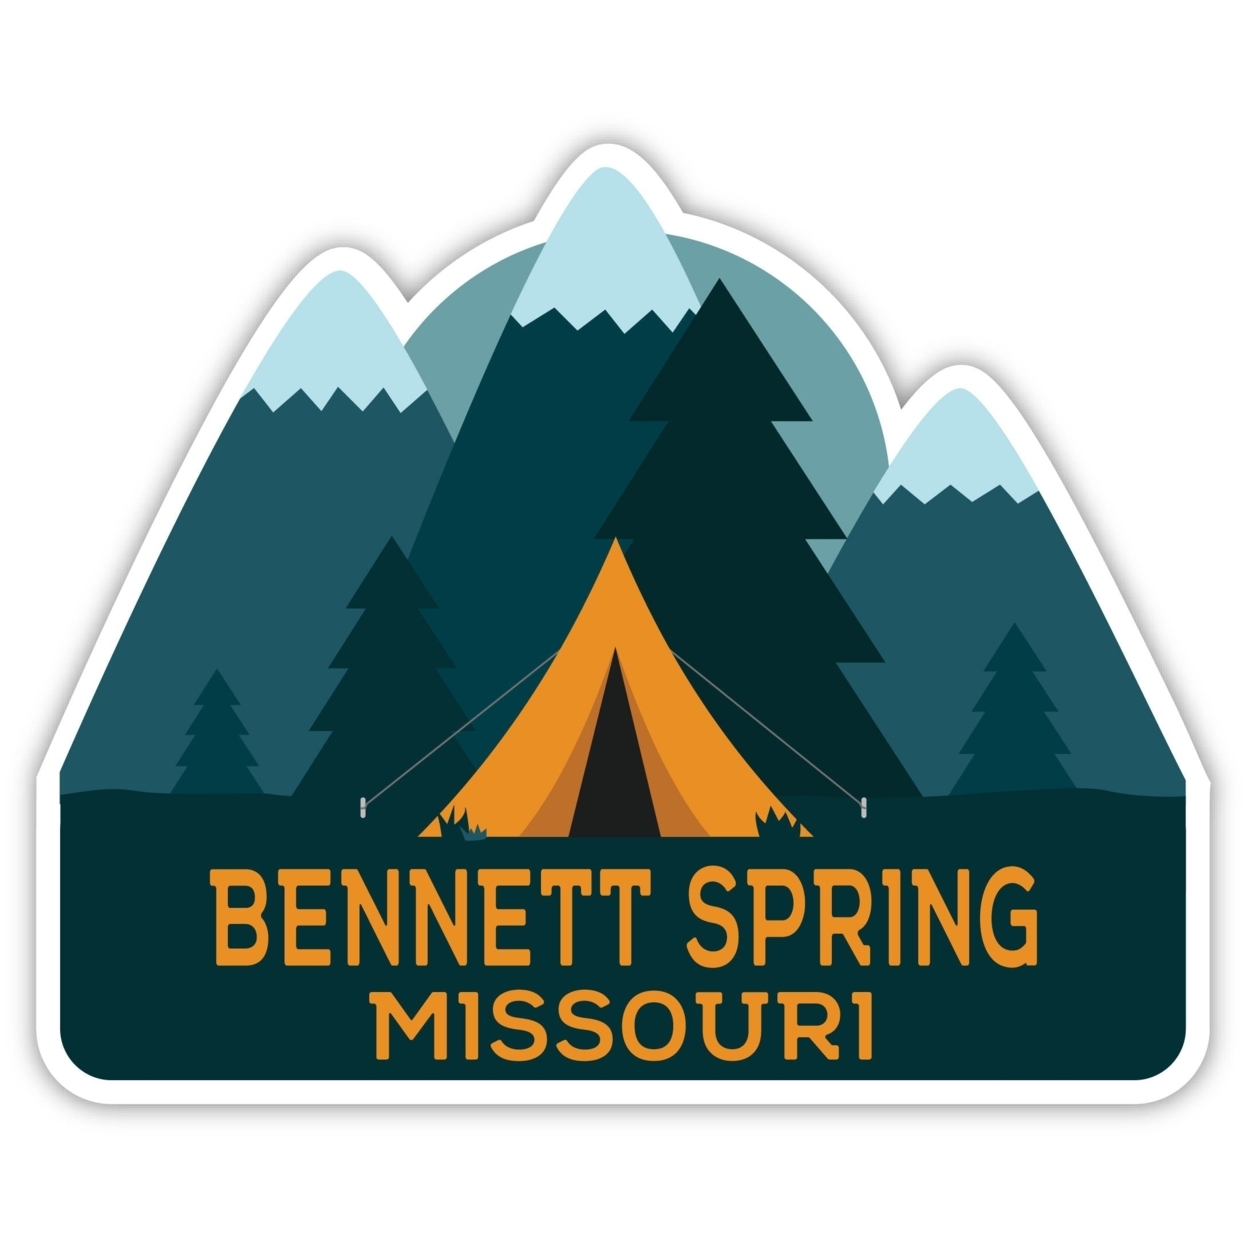 Bennett Spring Missouri Souvenir Decorative Stickers (Choose Theme And Size) - Single Unit, 10-Inch, Tent